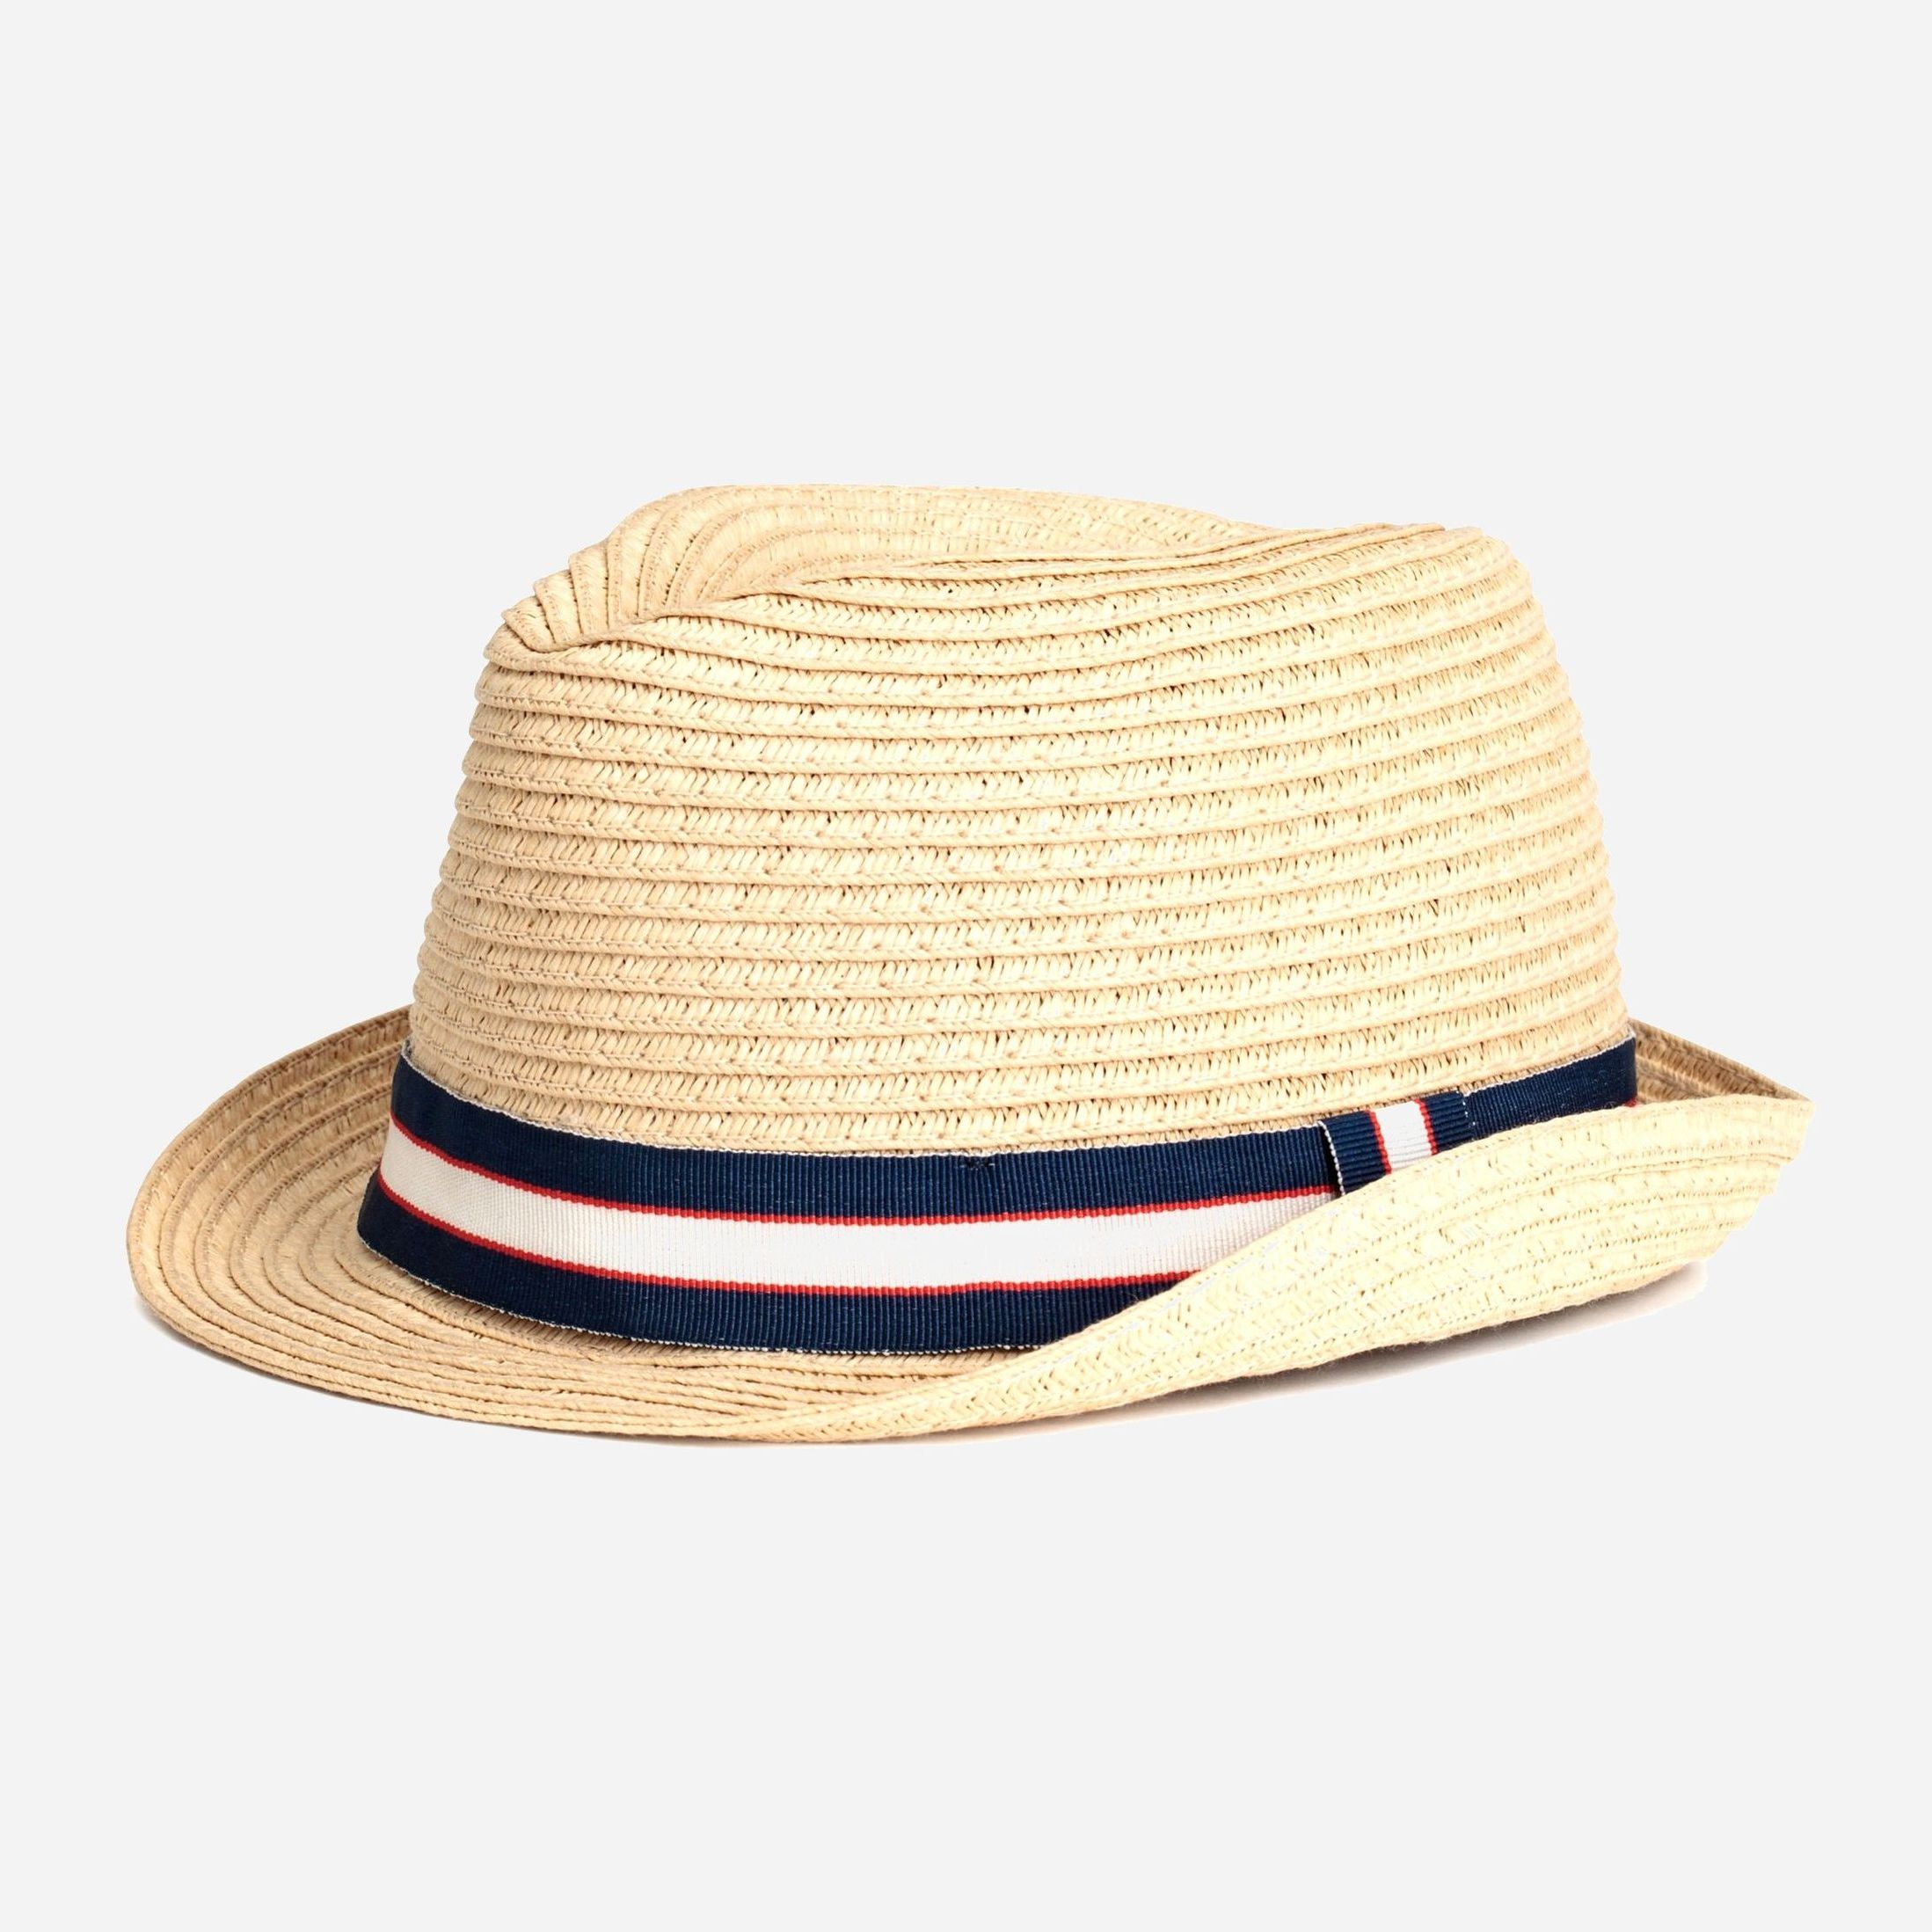 H hat. Шляпа Pepe Jeans соломенная. Соломенная шляпа h&m. Соломенные шляпы детские. Шляпа соломенная для мальчика.